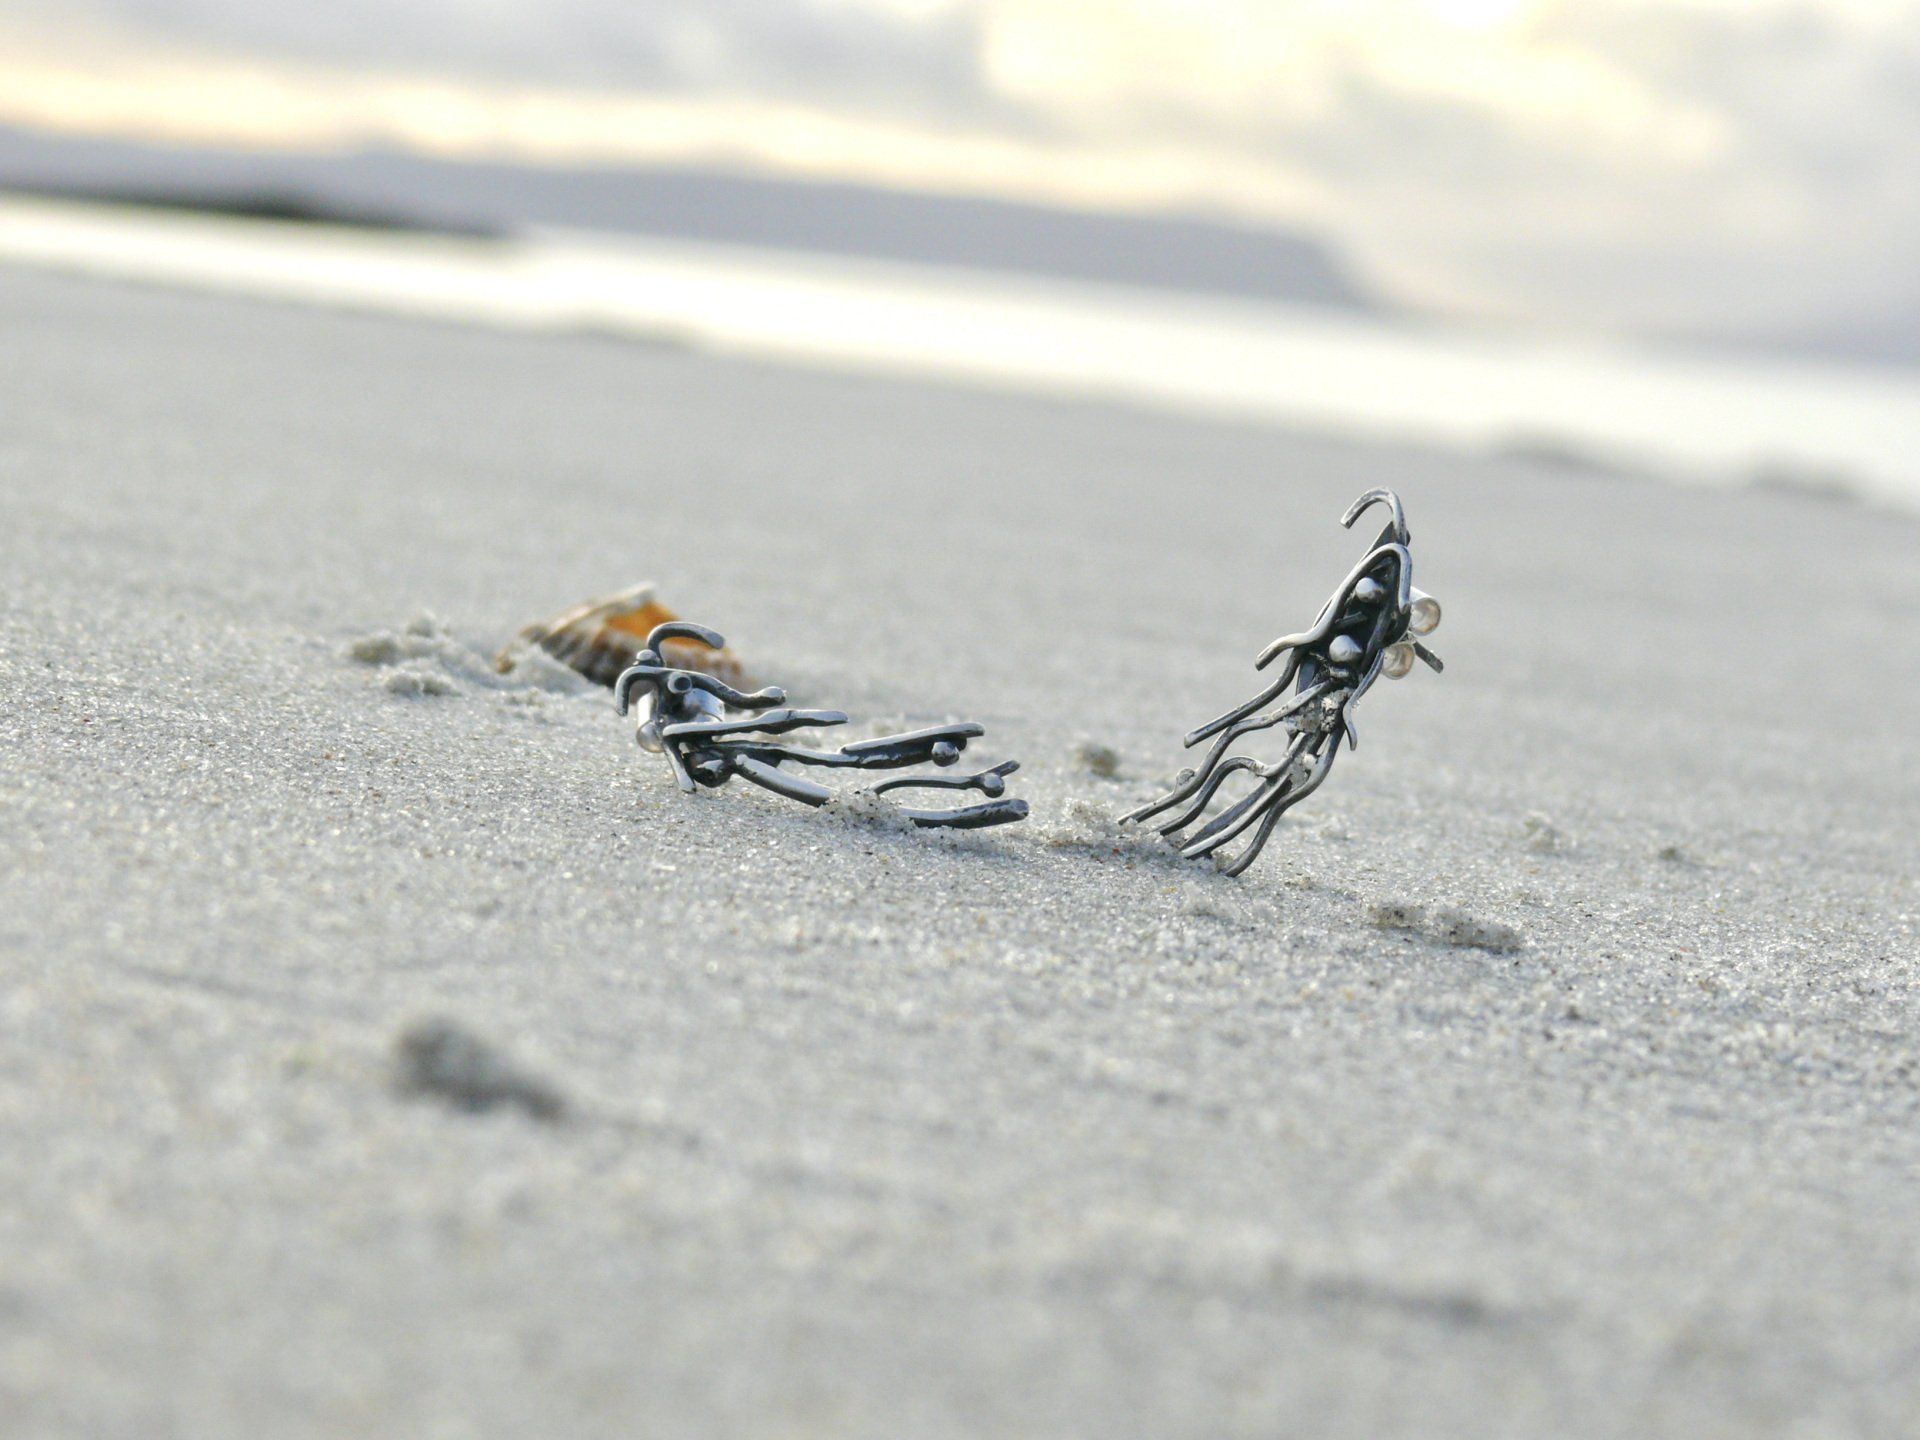 earrings handmade in scotland. Featured on a scottish beach near arisaig